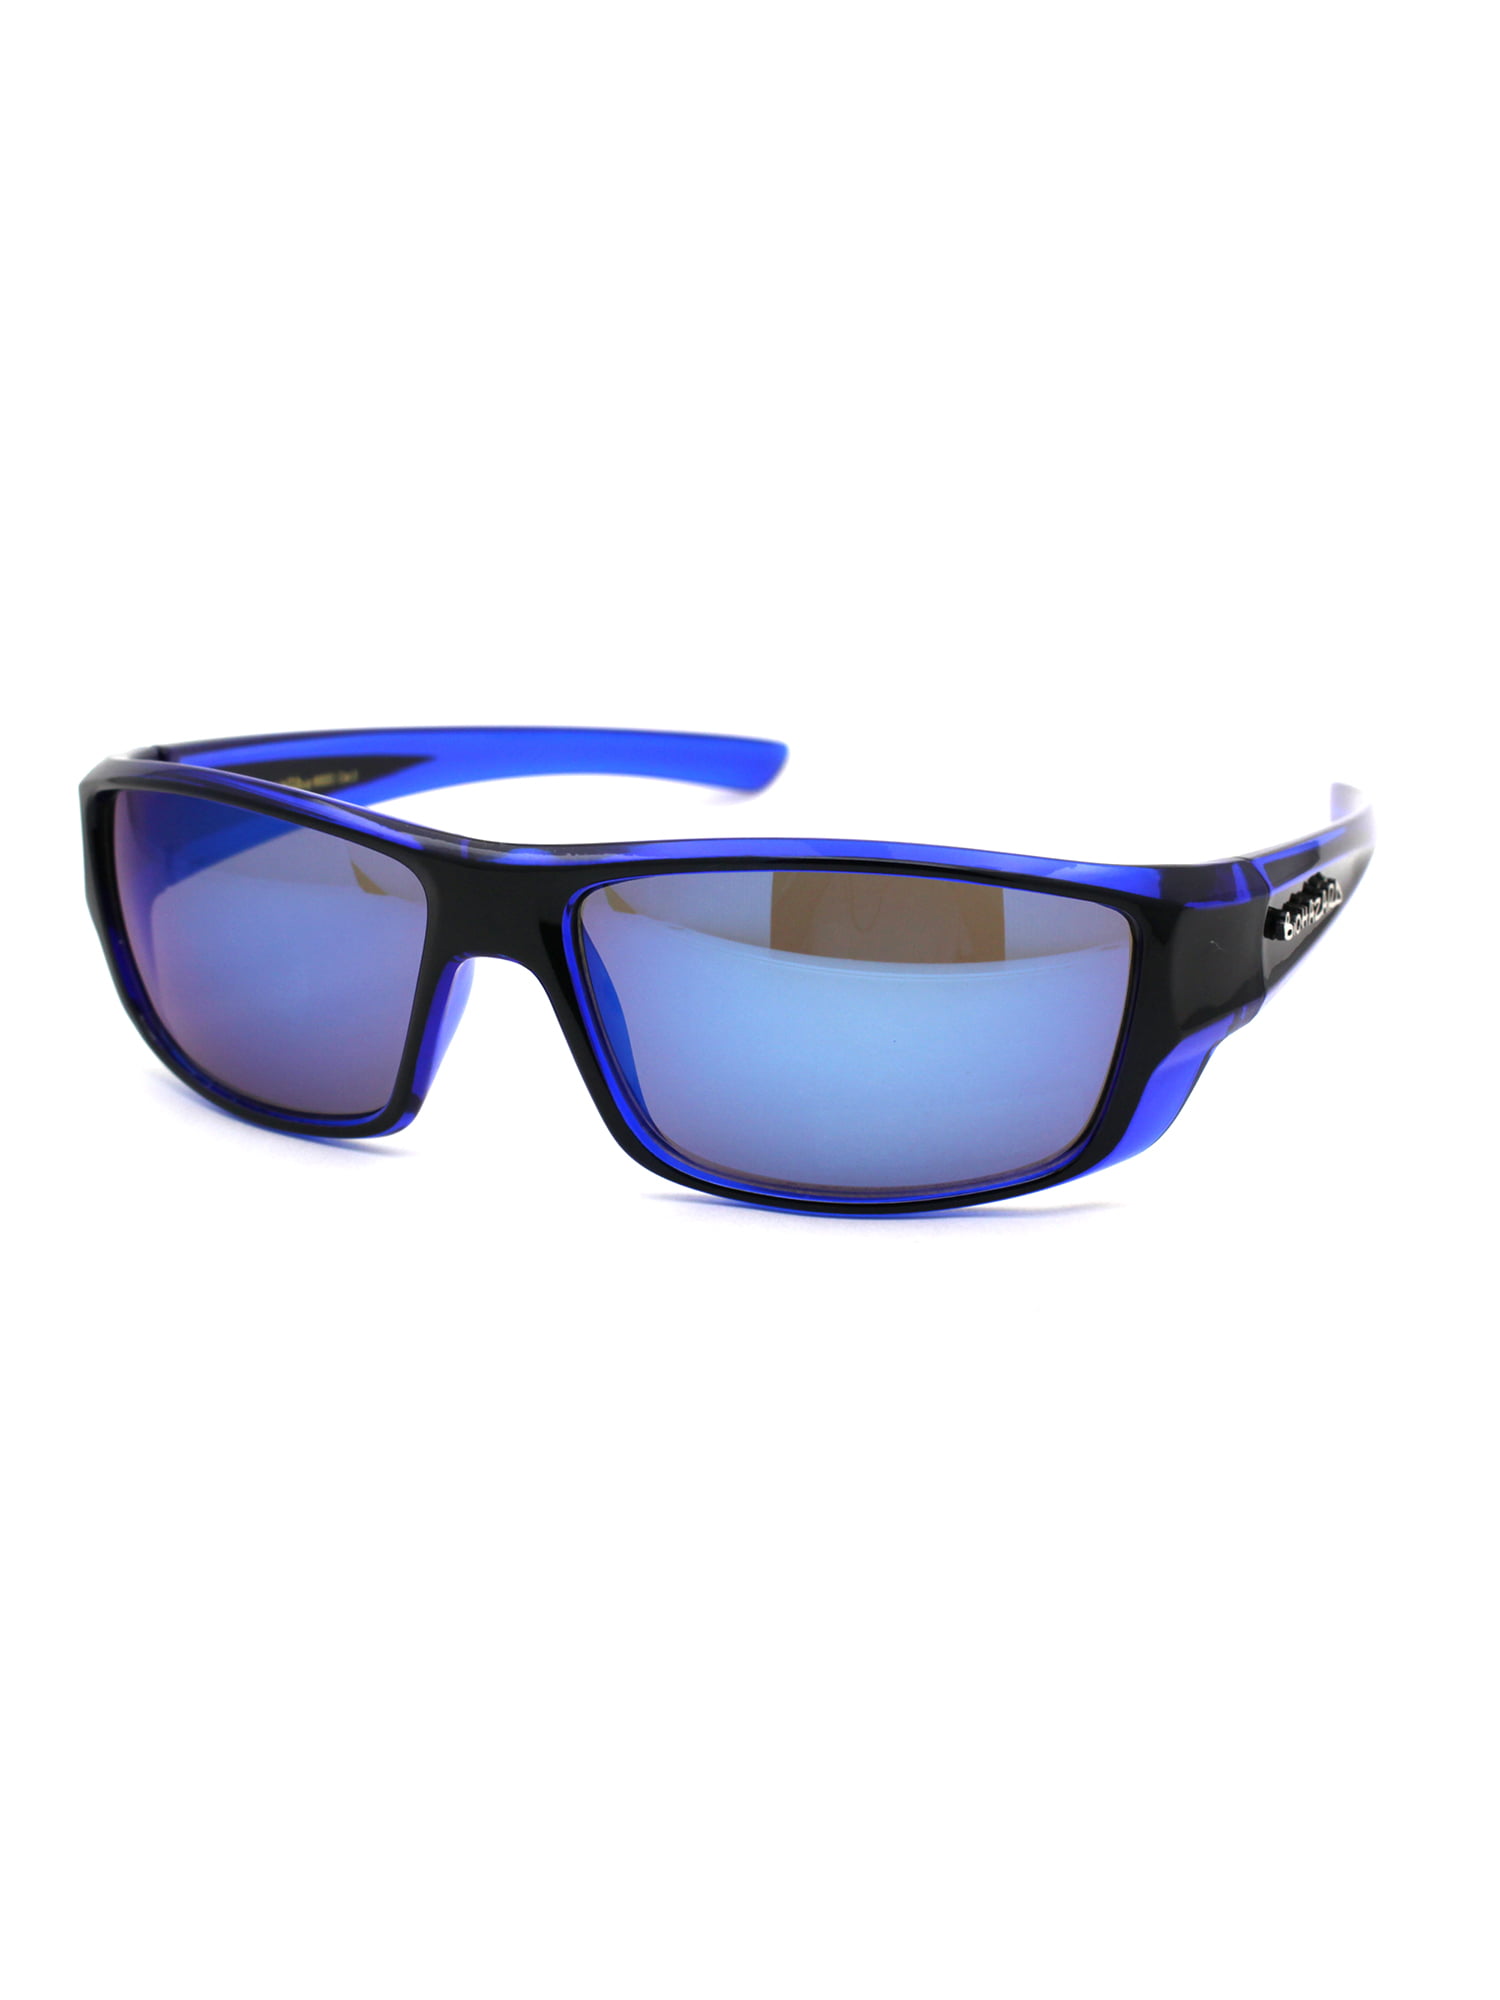 Biohazard Sunglasses Racer Round Aviators Multicolor Reflective Lens 